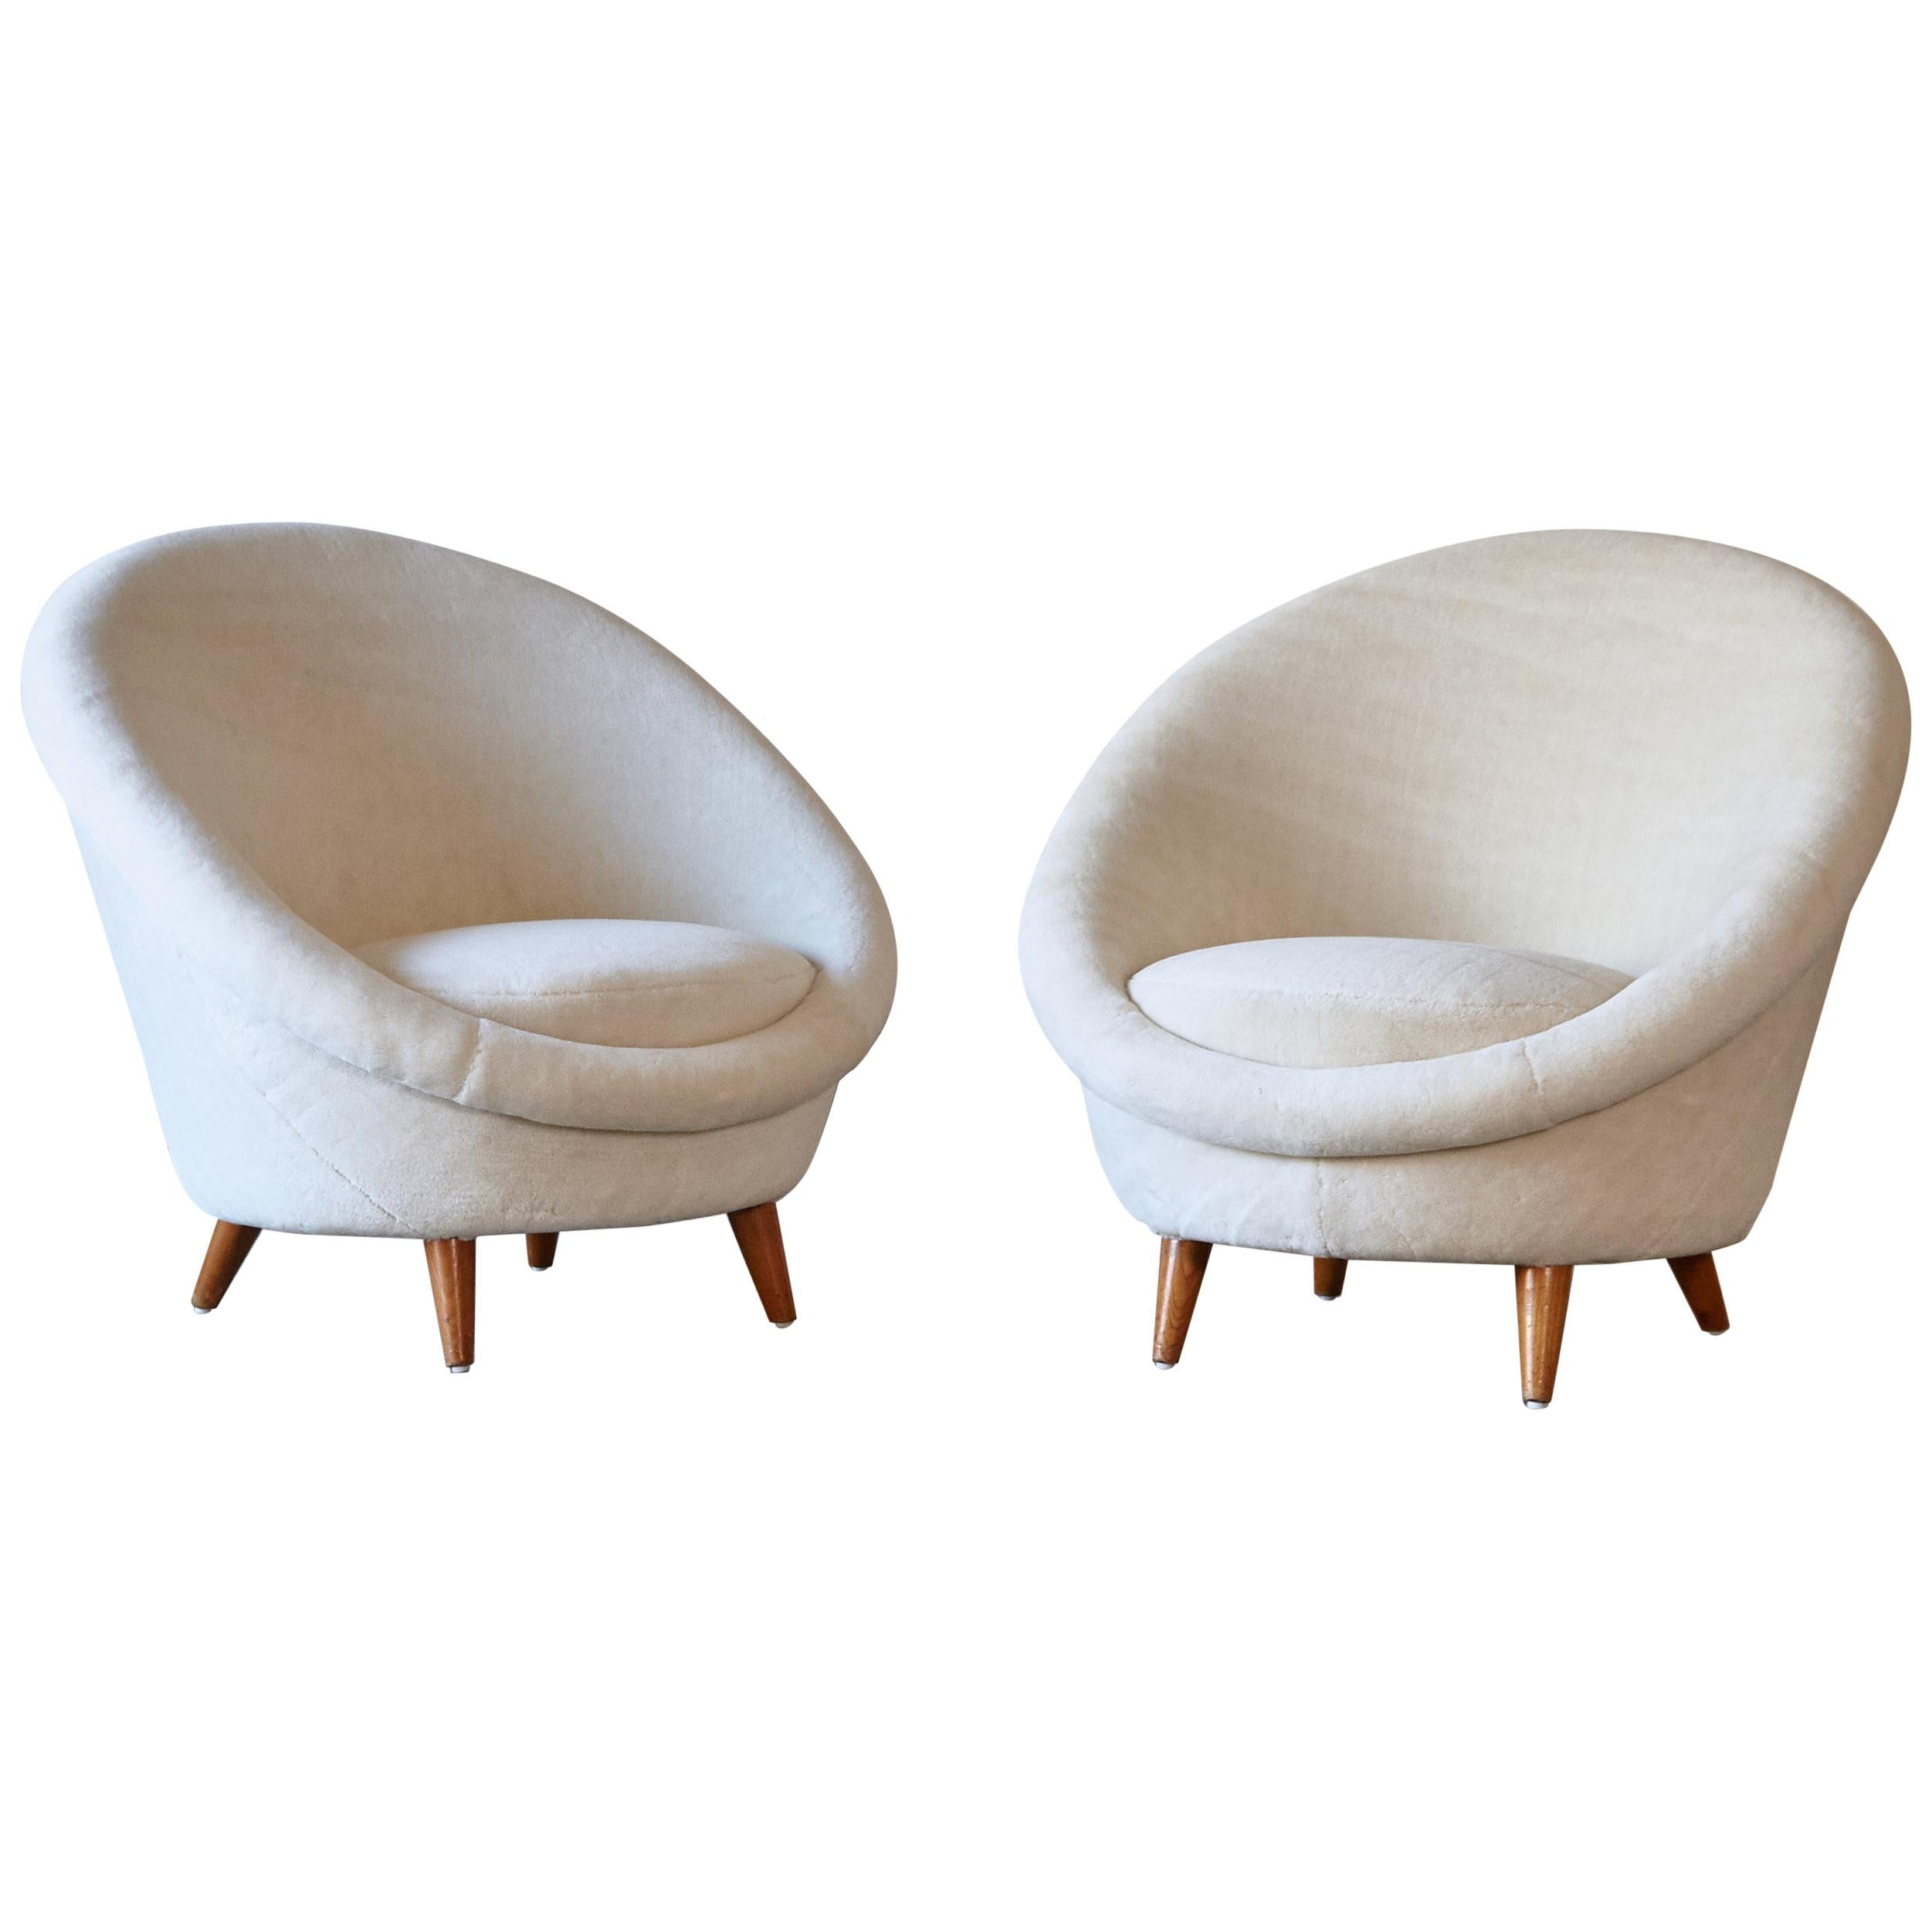 Rare Pair of 1950s Norwegian Egg Chairs, Newly Upholstered in Alpaca